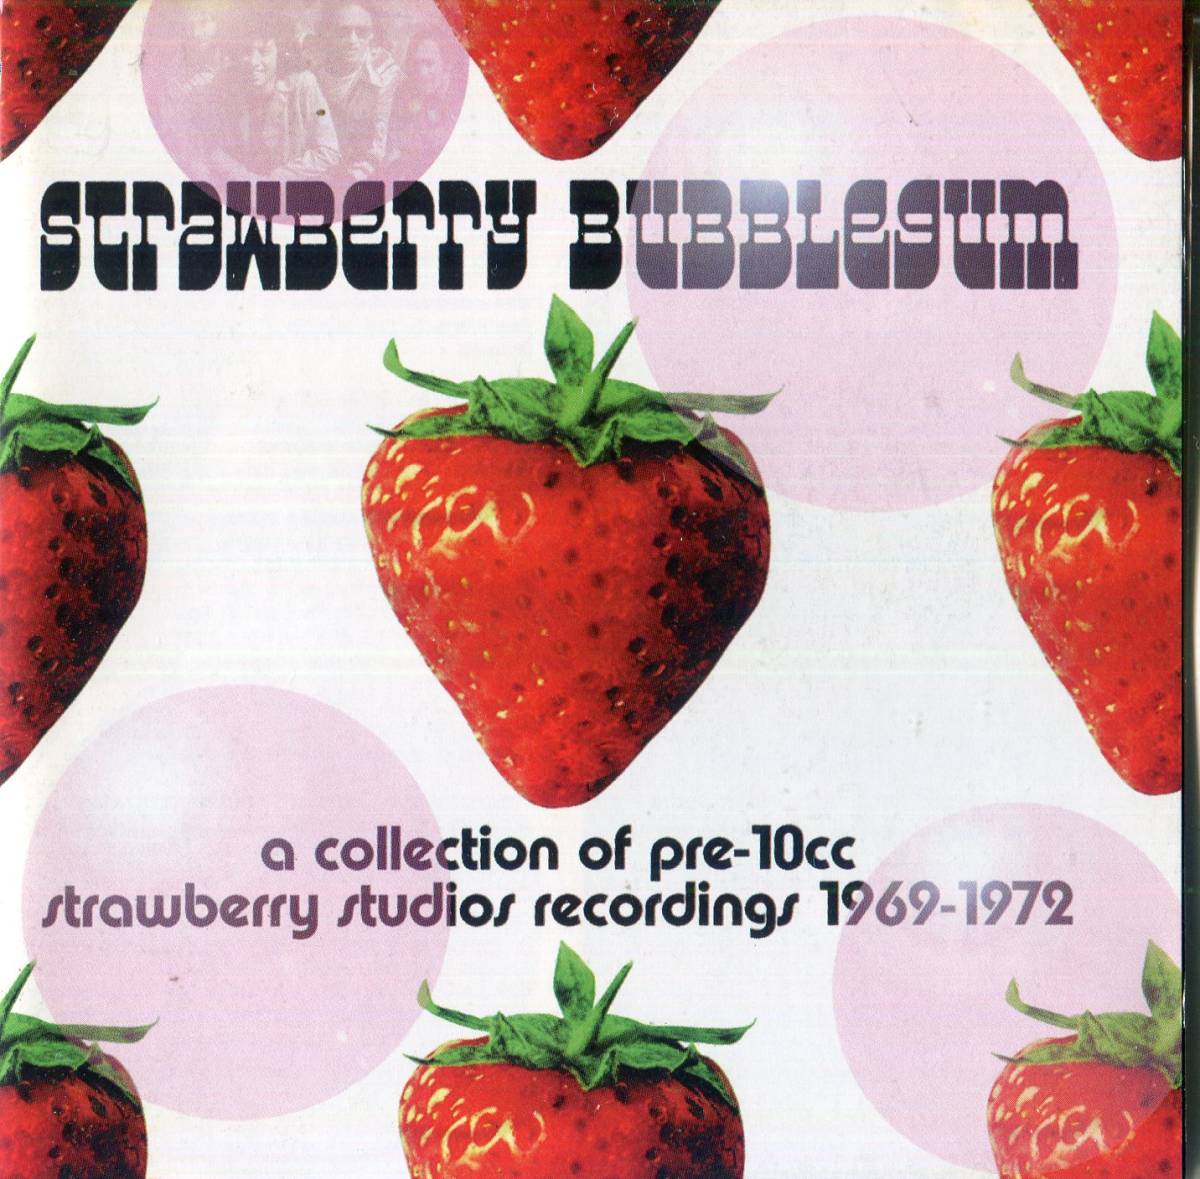 strawberry 【おすすめ】 bubblegum - a collection of EU盤cd strawbery 1969-1972 返品送料無料 studios pre-10cc recordings